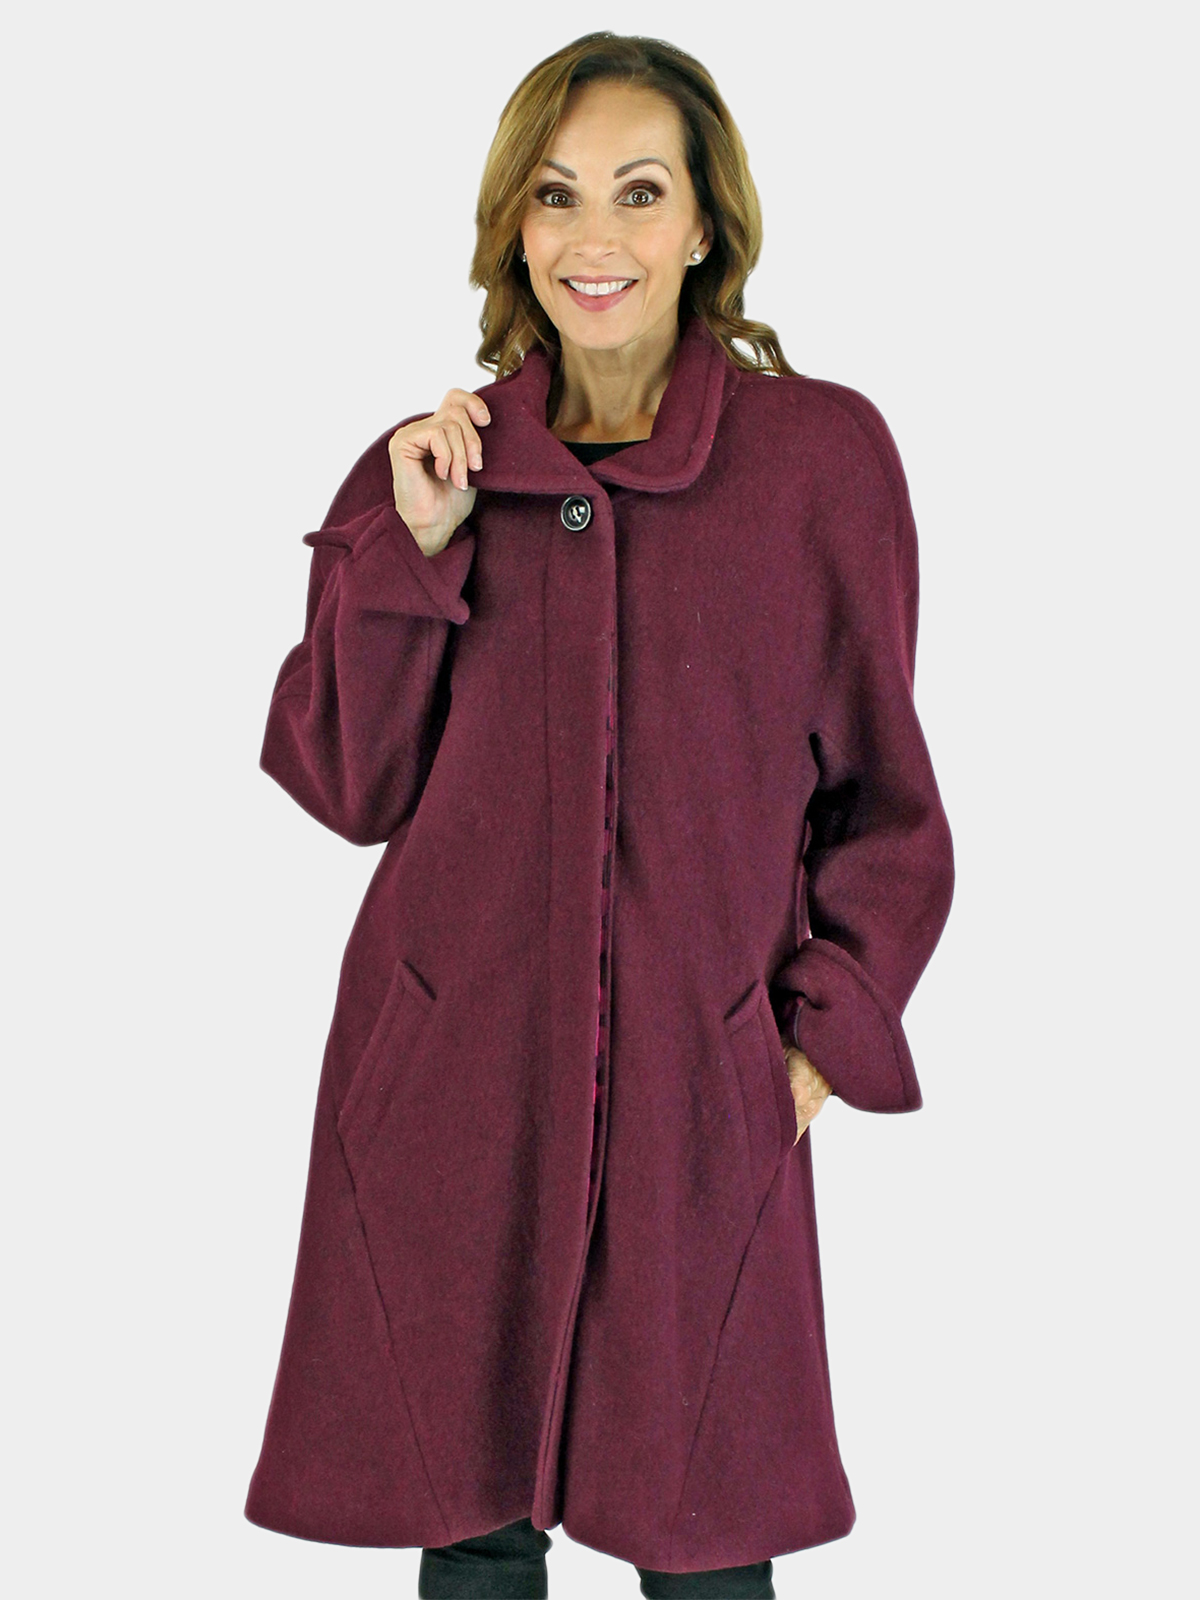 NEW Woman's Wine Cloth Coat